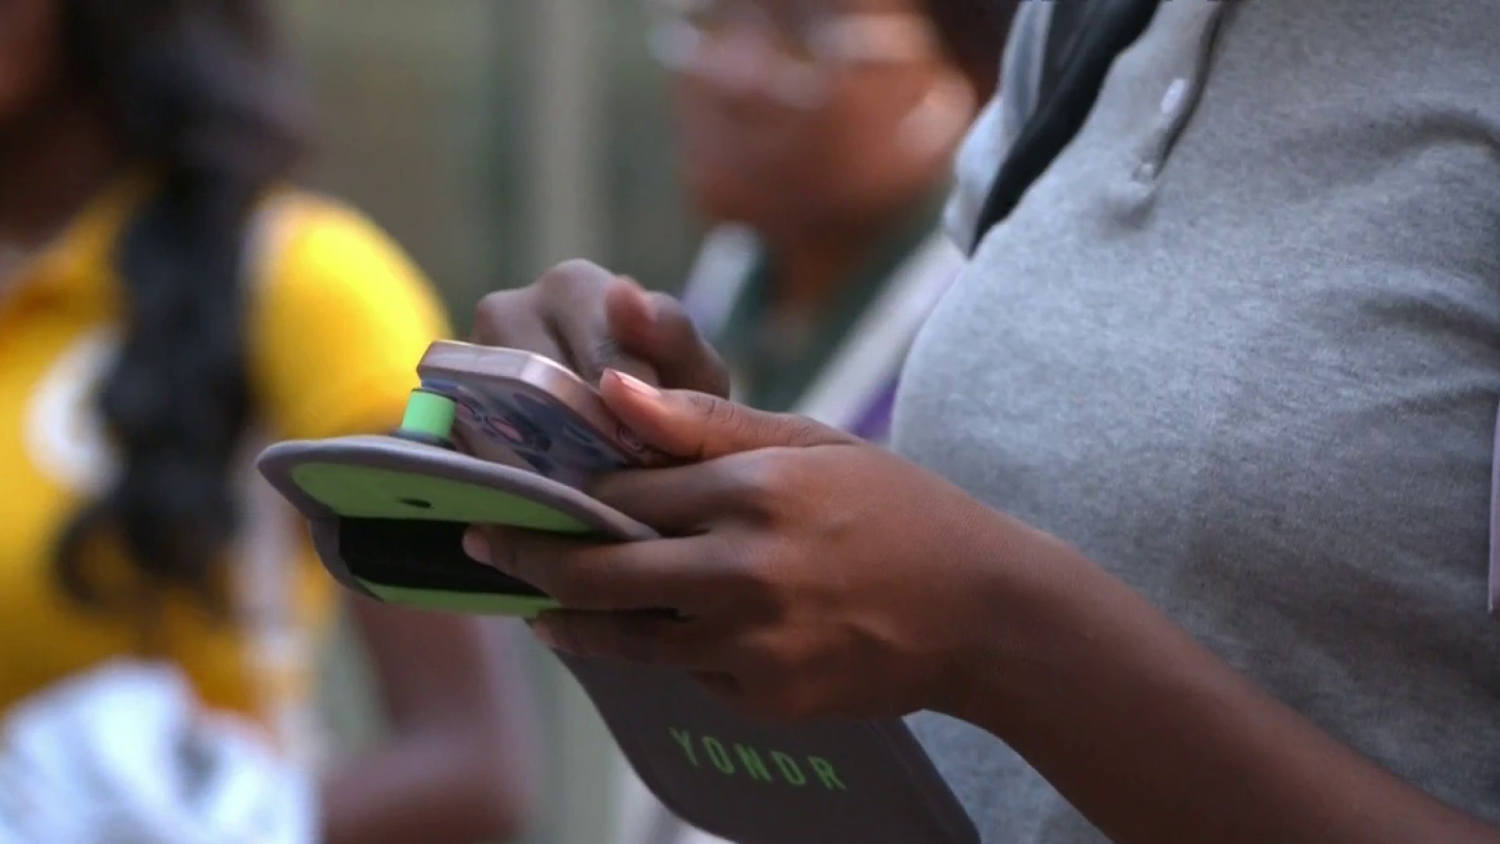 Schools Took Away Students' Phones. Now They're Treating